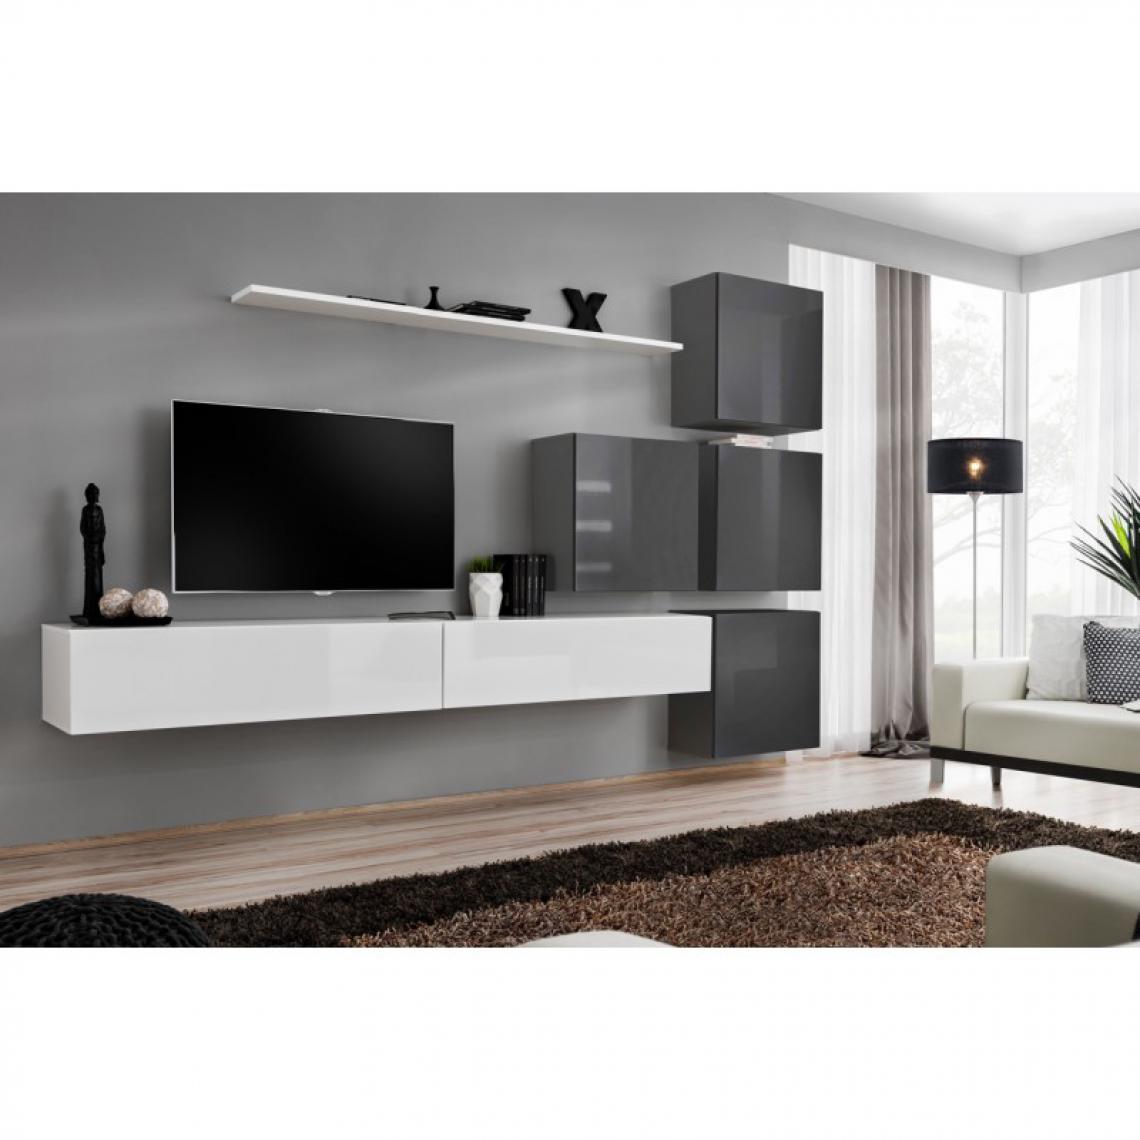 Ac-Deco - Meuble TV Mural Design Switch IX 310cm Blanc & Gris - Meubles TV, Hi-Fi